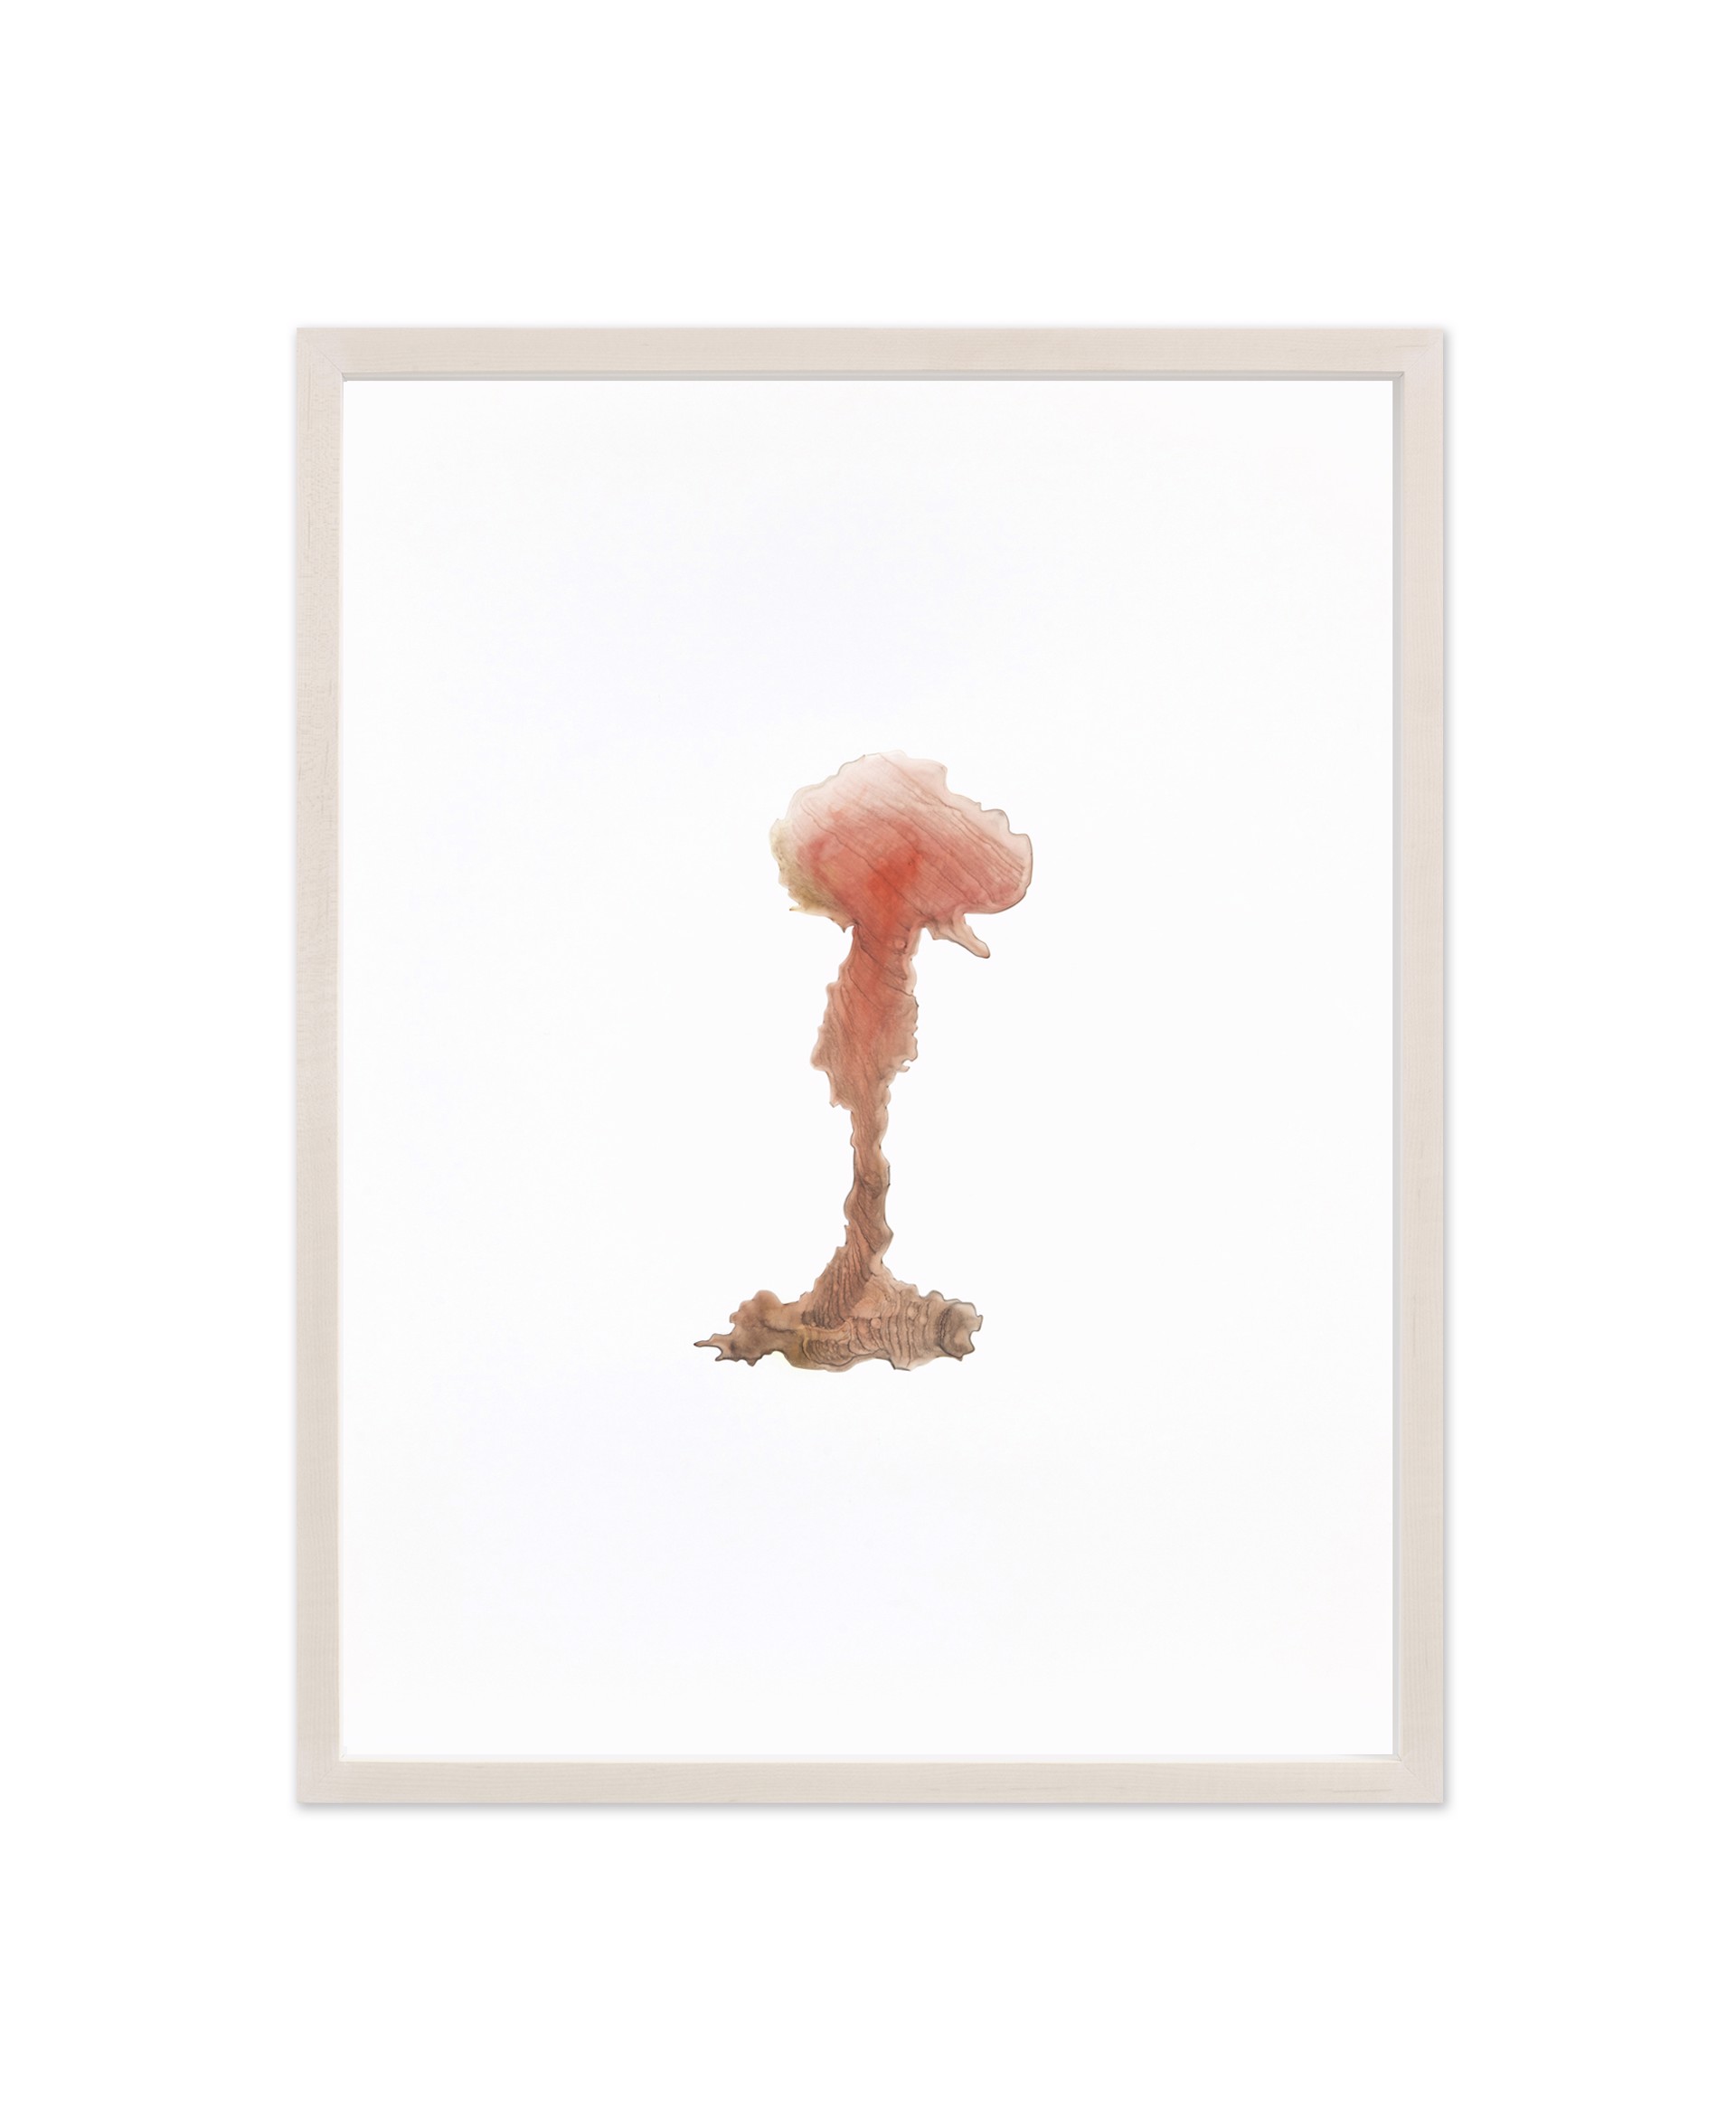 Mushroom Cloud #1.8 by Jugnet + Clairet